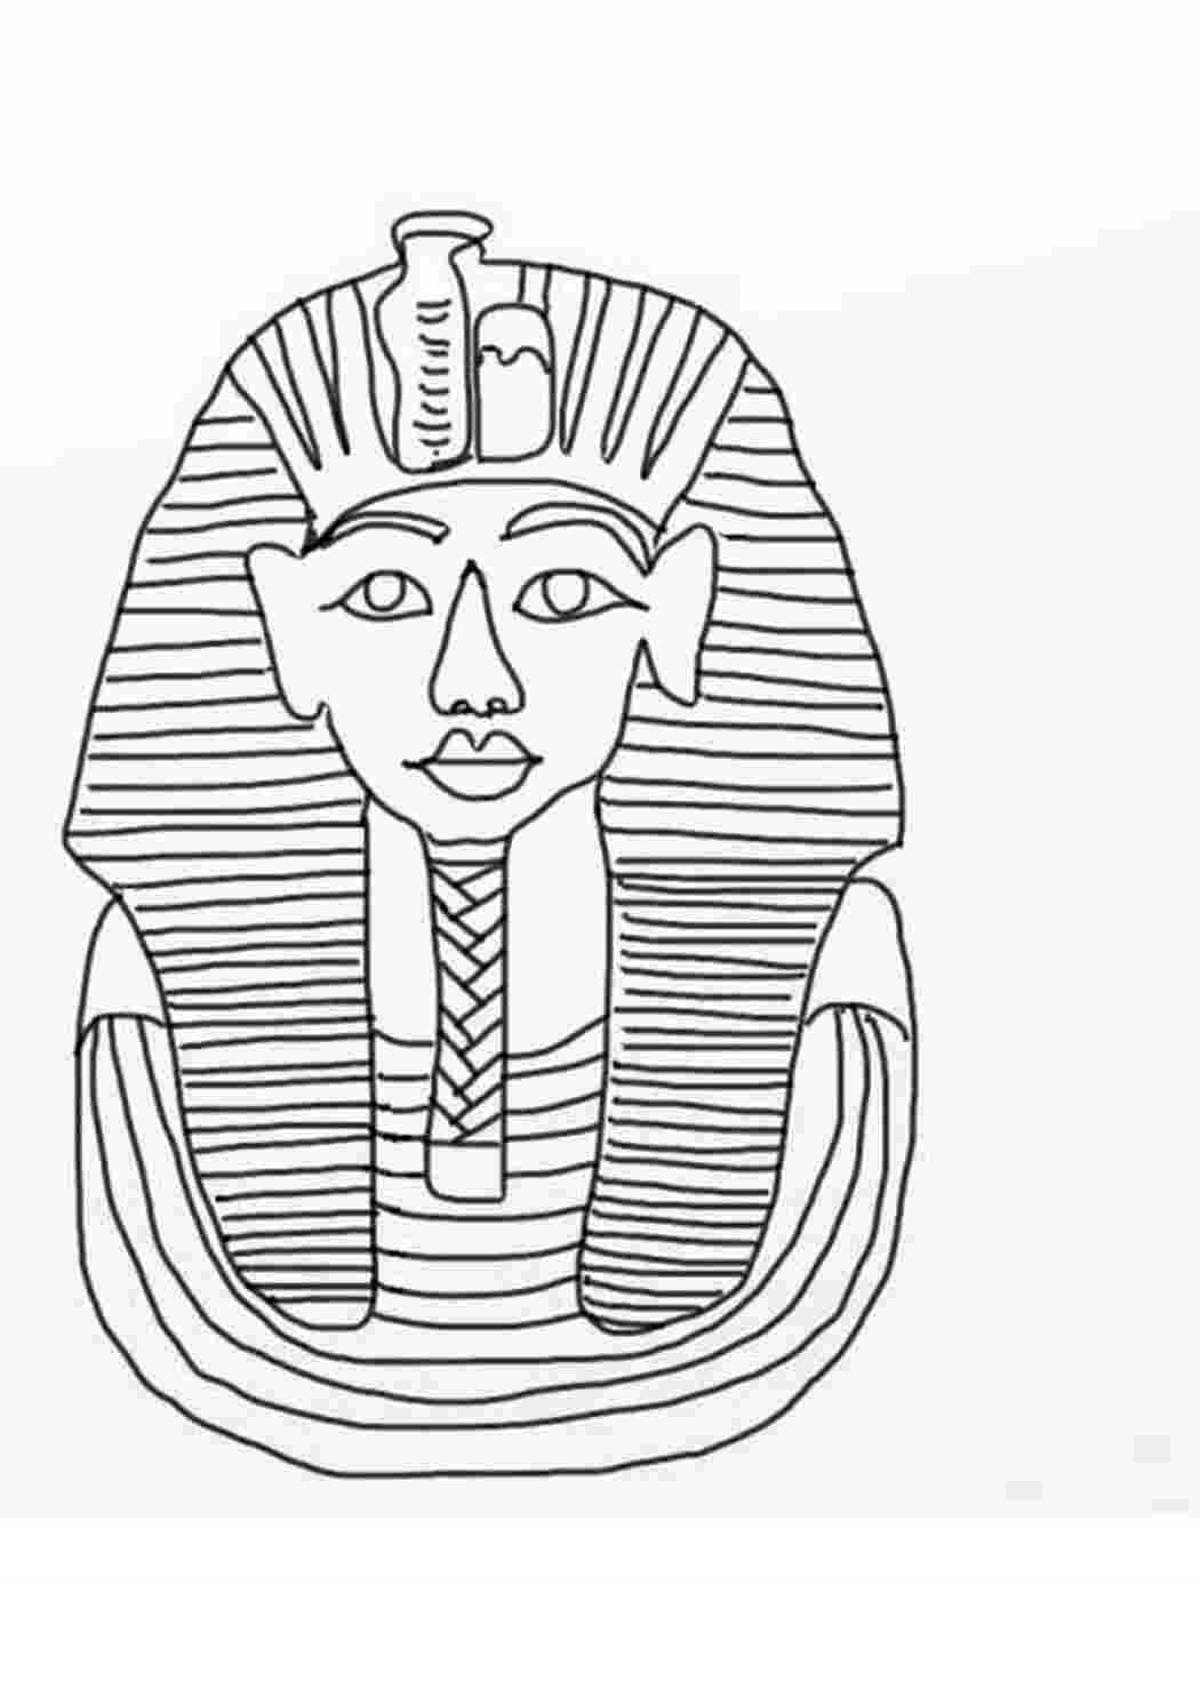 Mask of Pharaoh Tutankhamen from class 5 #14